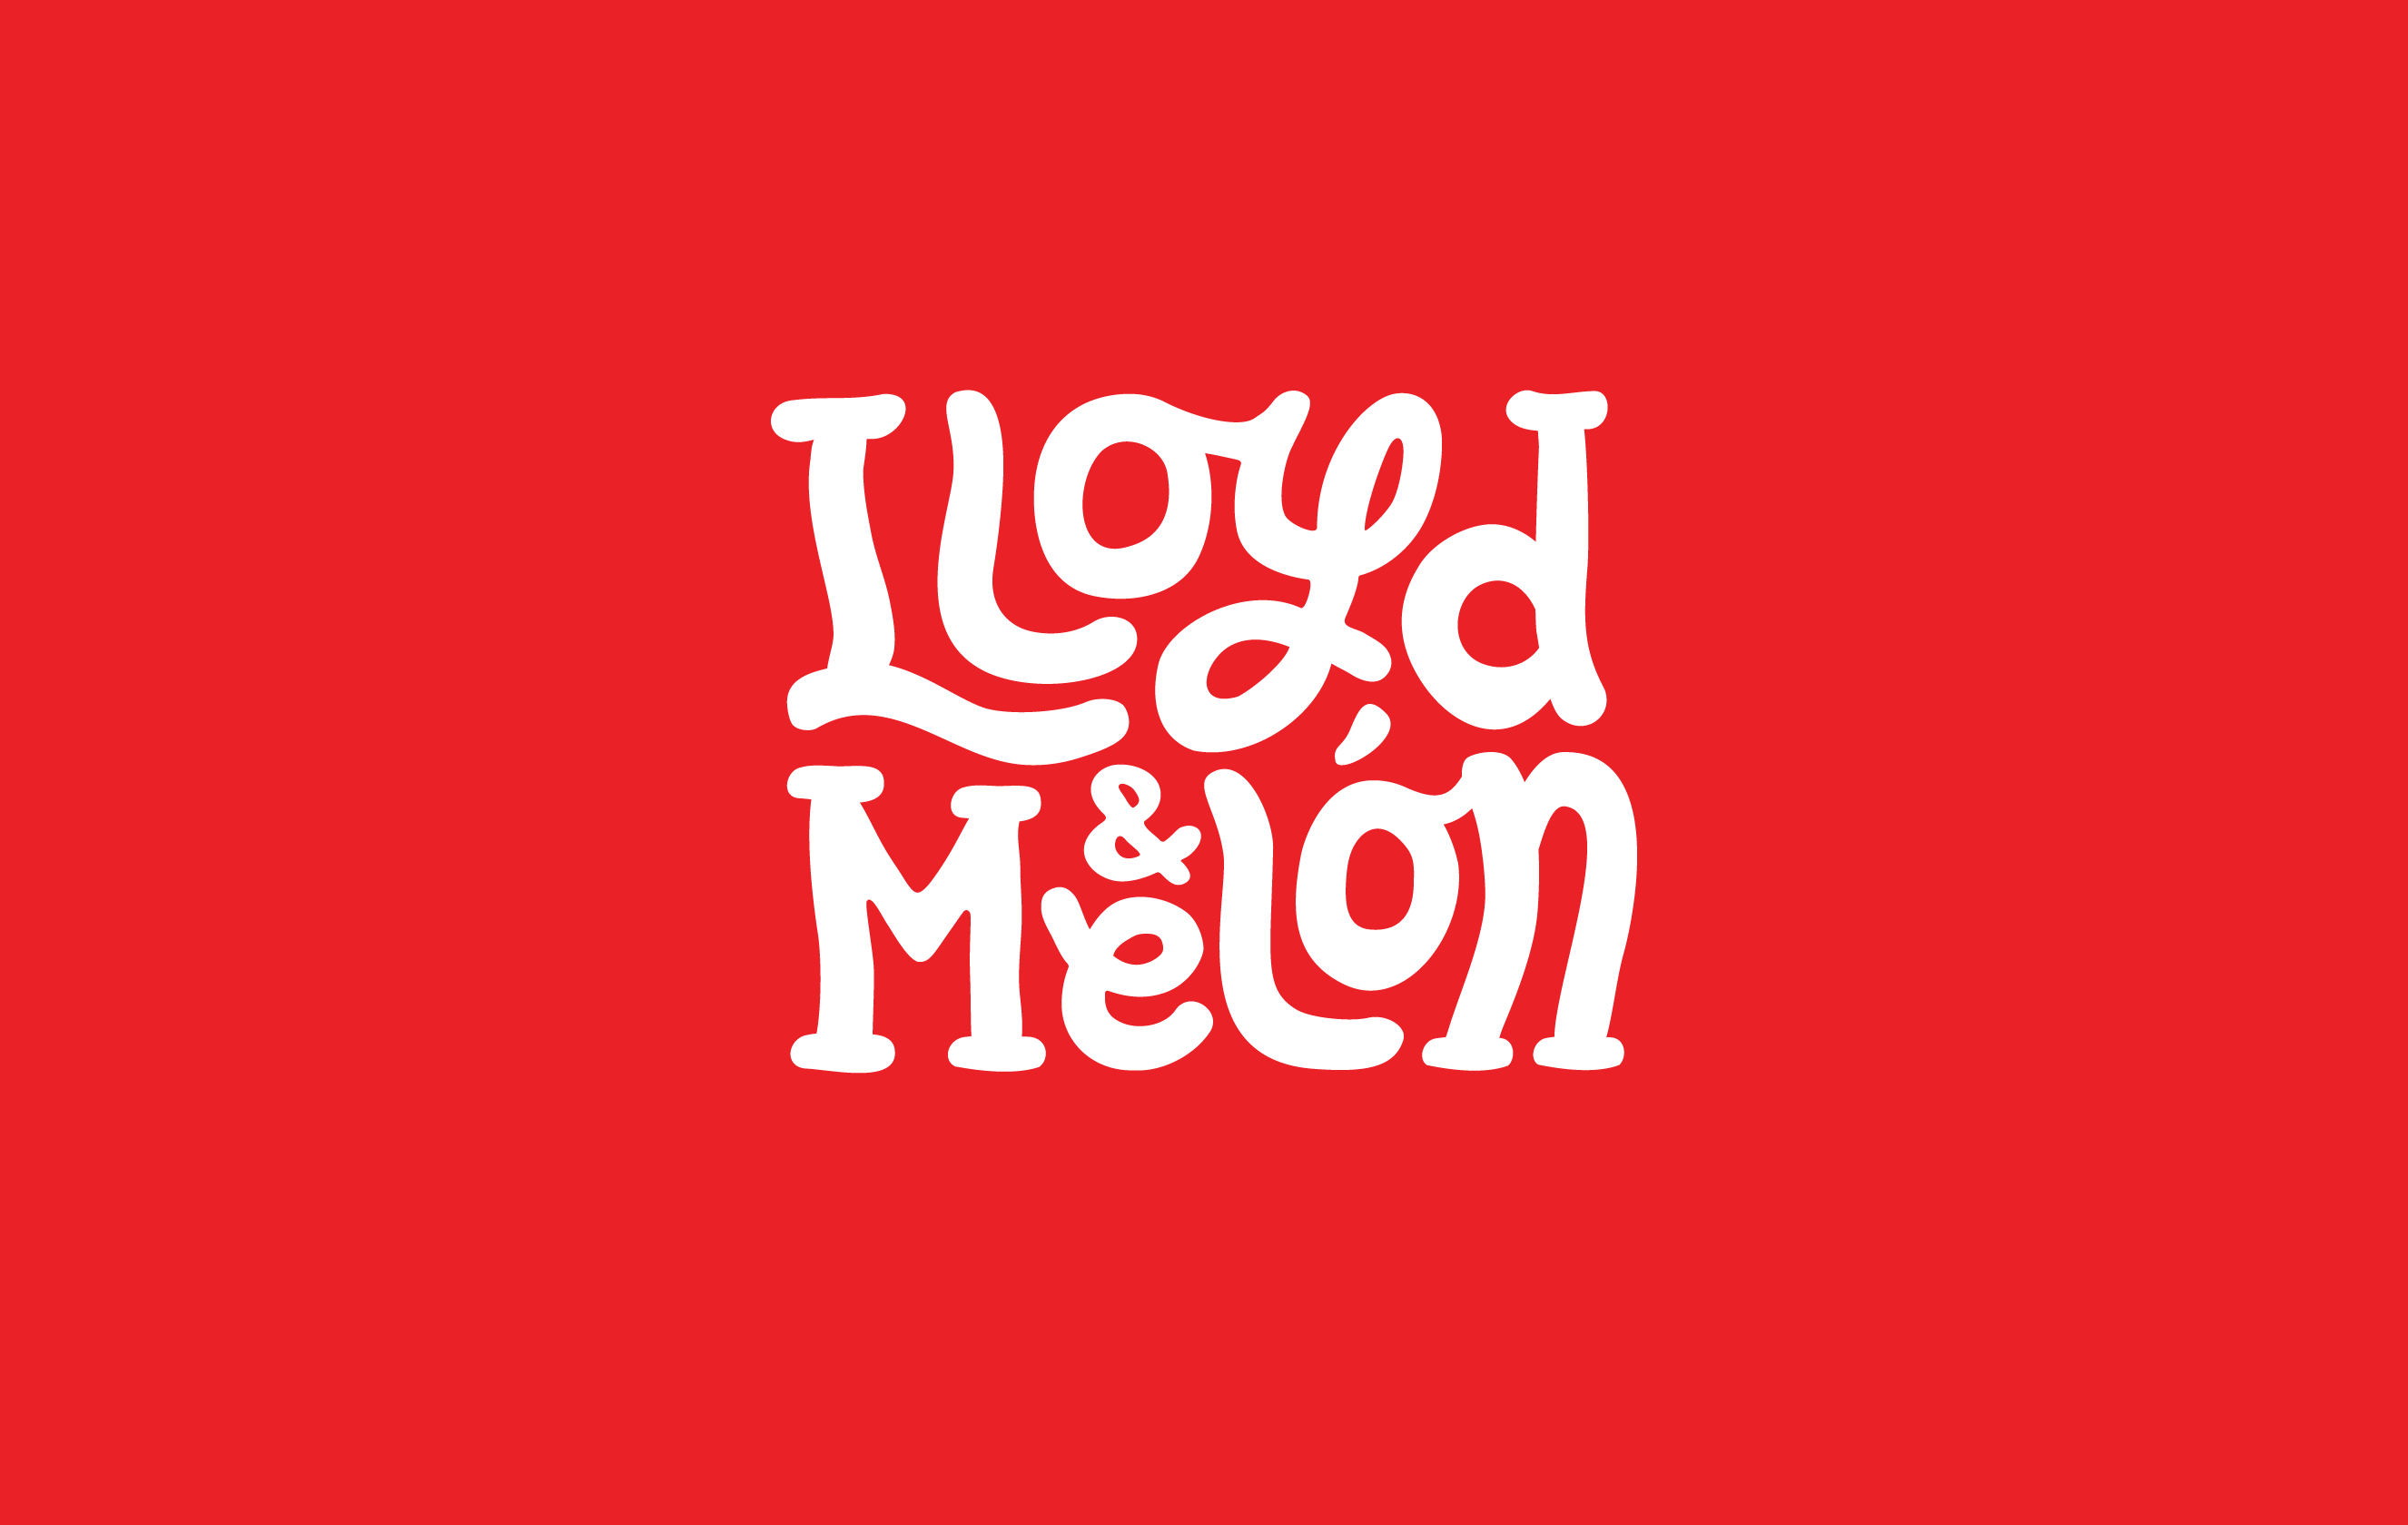 Lloyd-Melon-logo